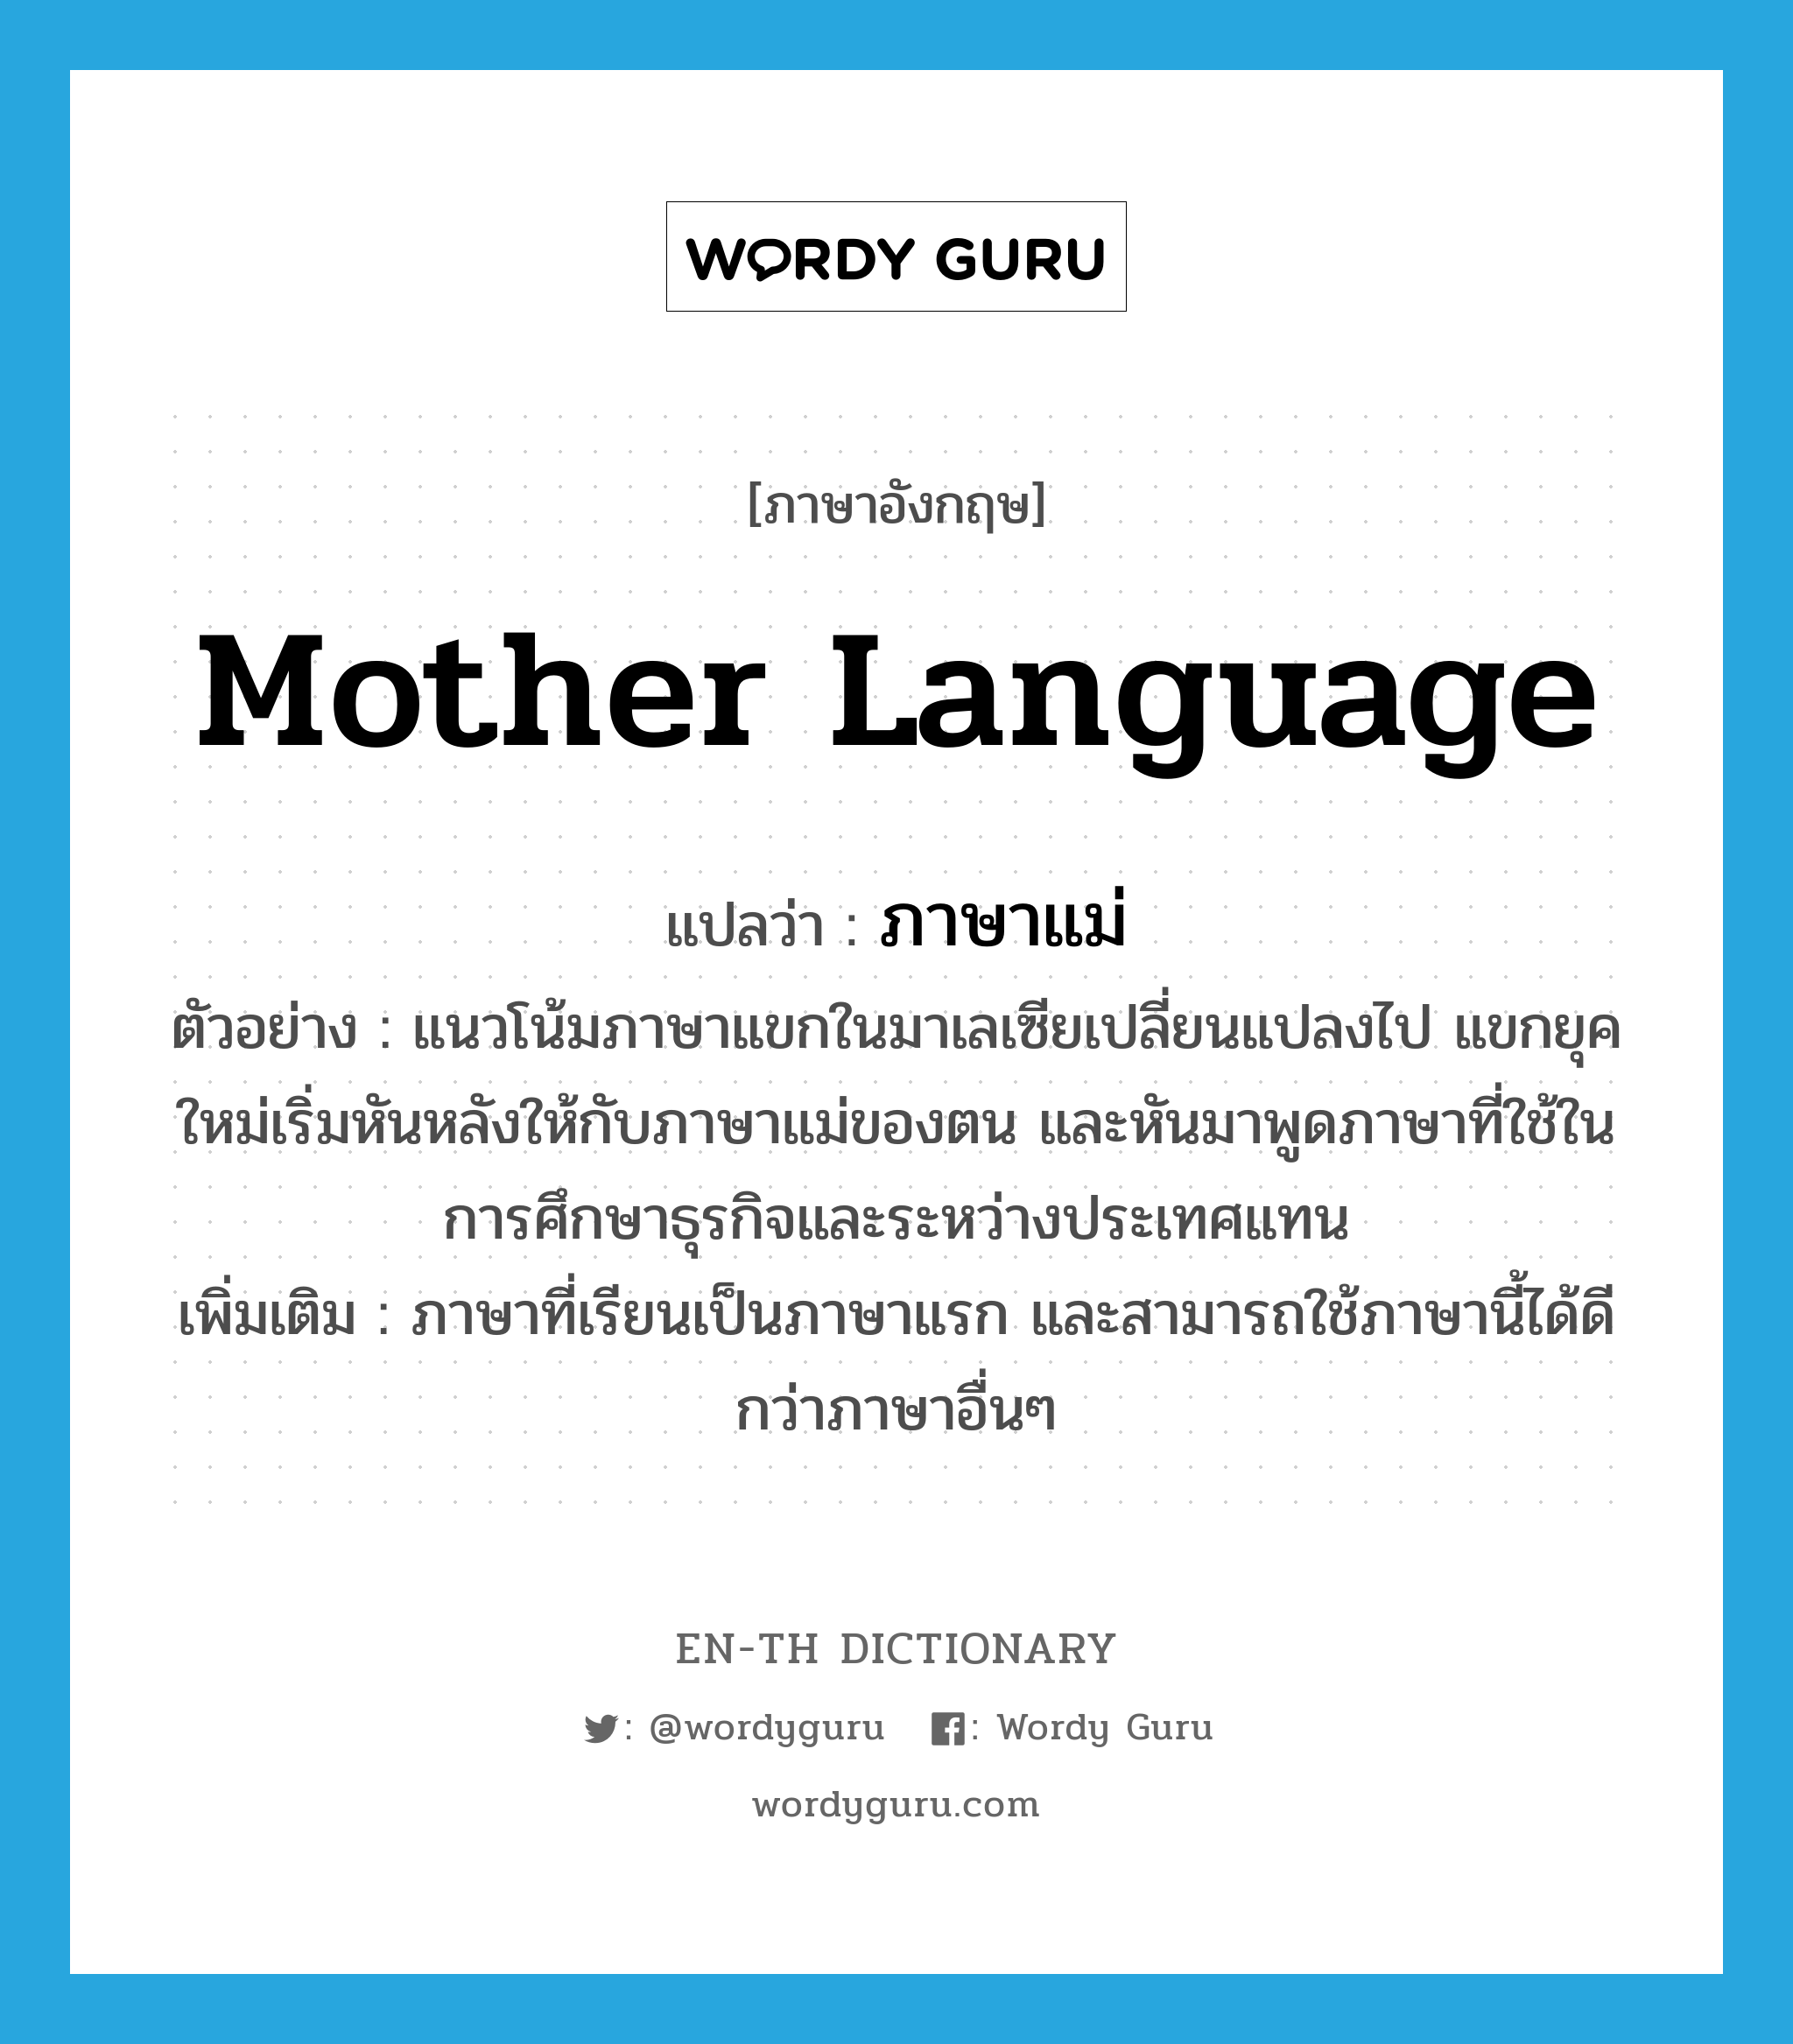 mother language แปลว่า?, คำศัพท์ภาษาอังกฤษ mother language แปลว่า ภาษาแม่ ประเภท N ตัวอย่าง แนวโน้มภาษาแขกในมาเลเซียเปลี่ยนแปลงไป แขกยุคใหม่เริ่มหันหลังให้กับภาษาแม่ของตน และหันมาพูดภาษาที่ใช้ในการศึกษาธุรกิจและระหว่างประเทศแทน เพิ่มเติม ภาษาที่เรียนเป็นภาษาแรก และสามารถใช้ภาษานี้ได้ดีกว่าภาษาอื่นๆ หมวด N